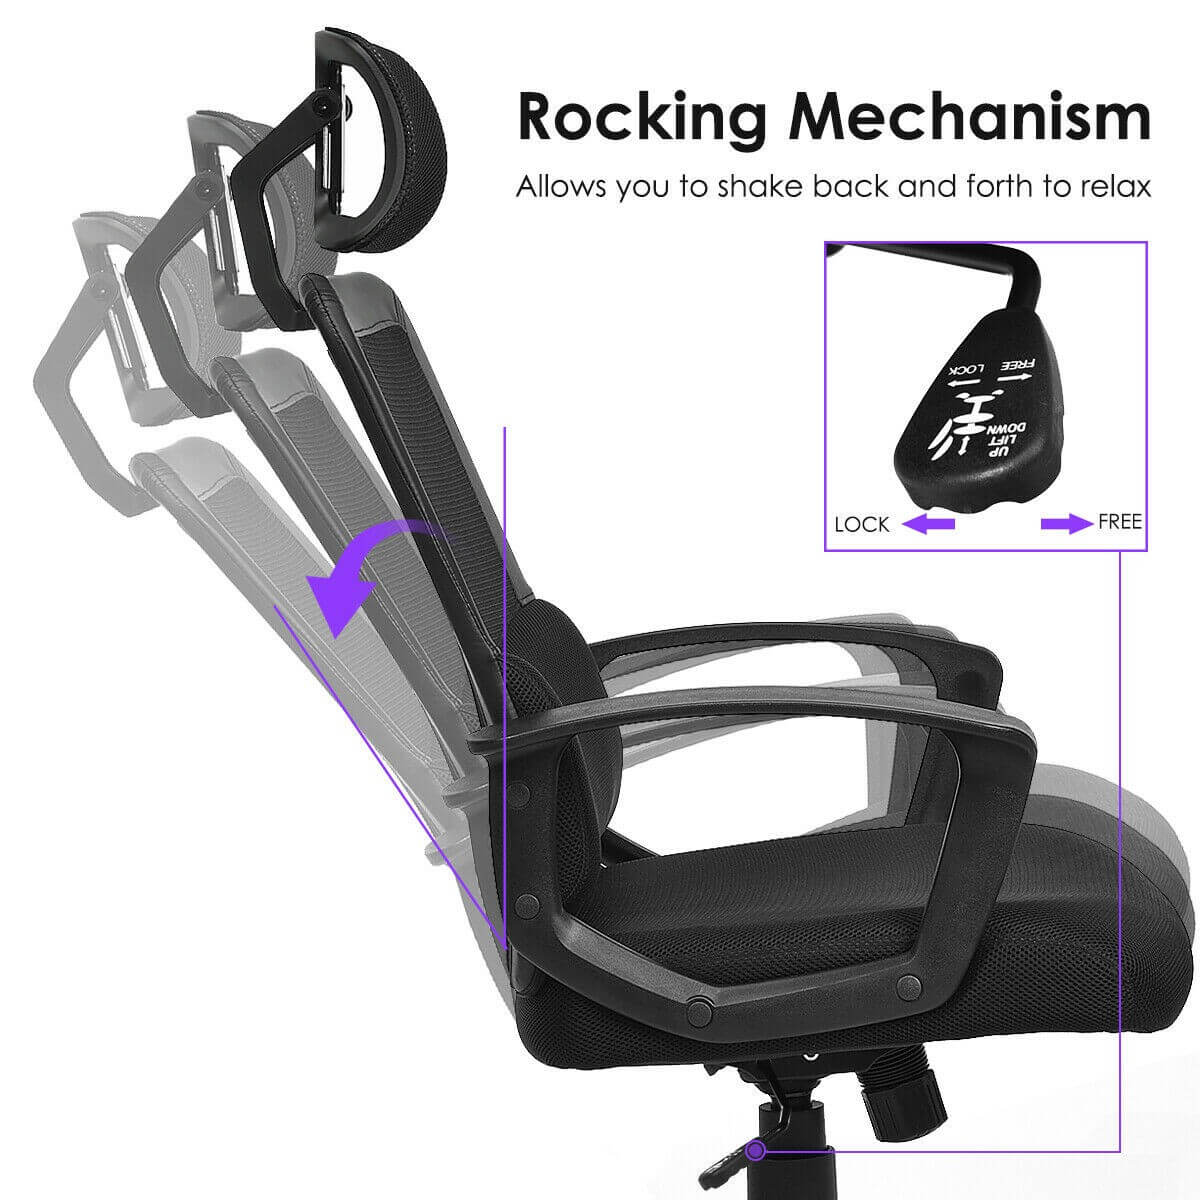 Rocking Mechanism of the Posturion ergonomic rocking chair